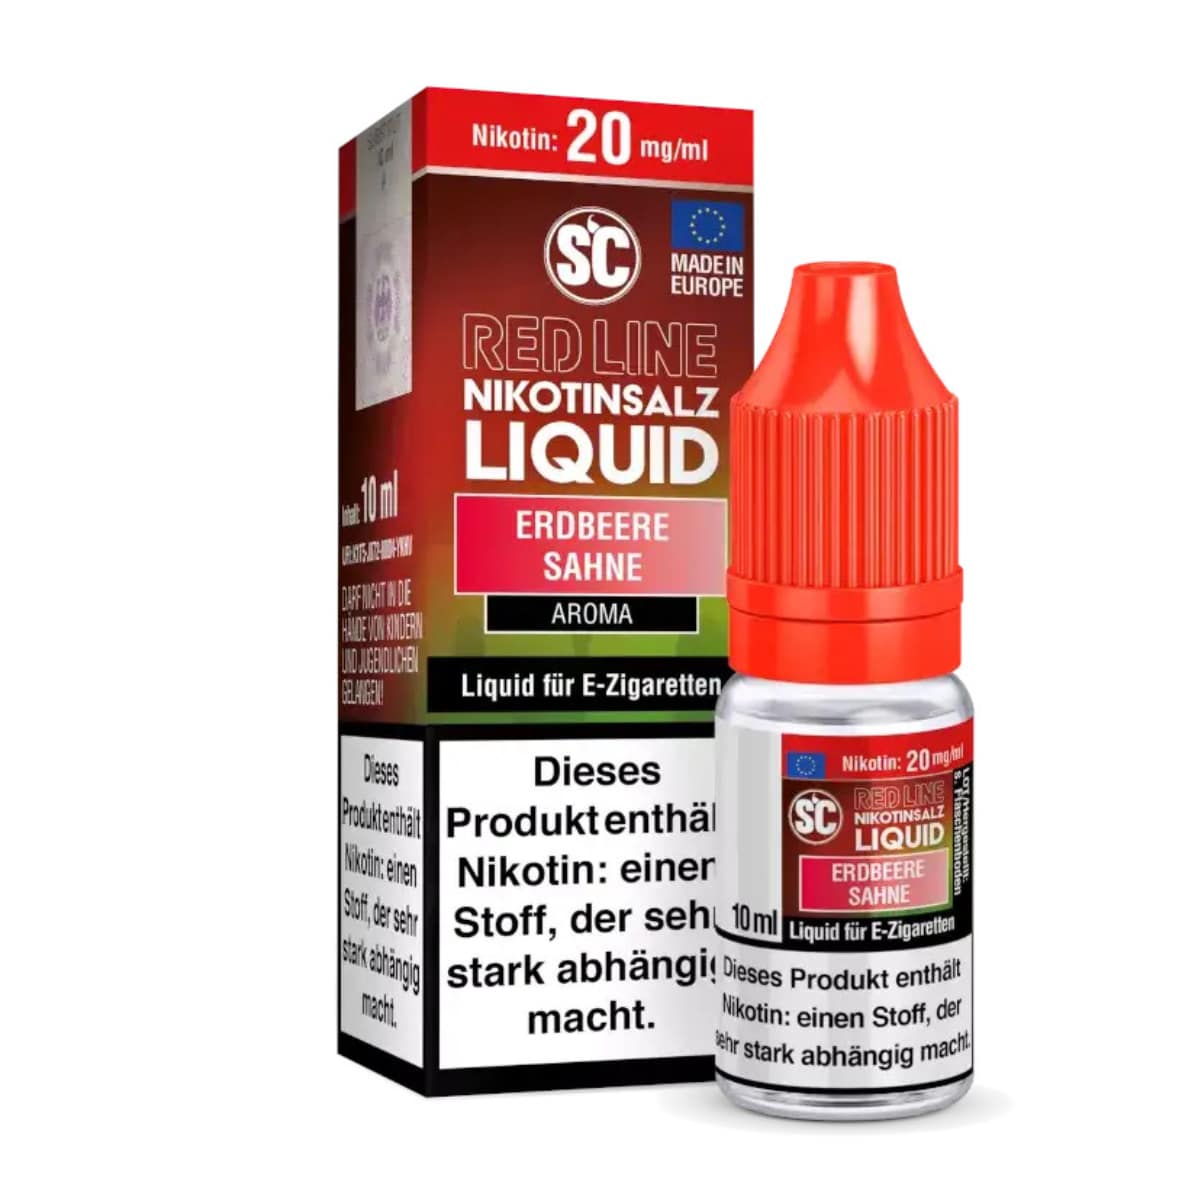 SC Red Line Nikotinsalz Liquid Erdbeere Sahne 10ml